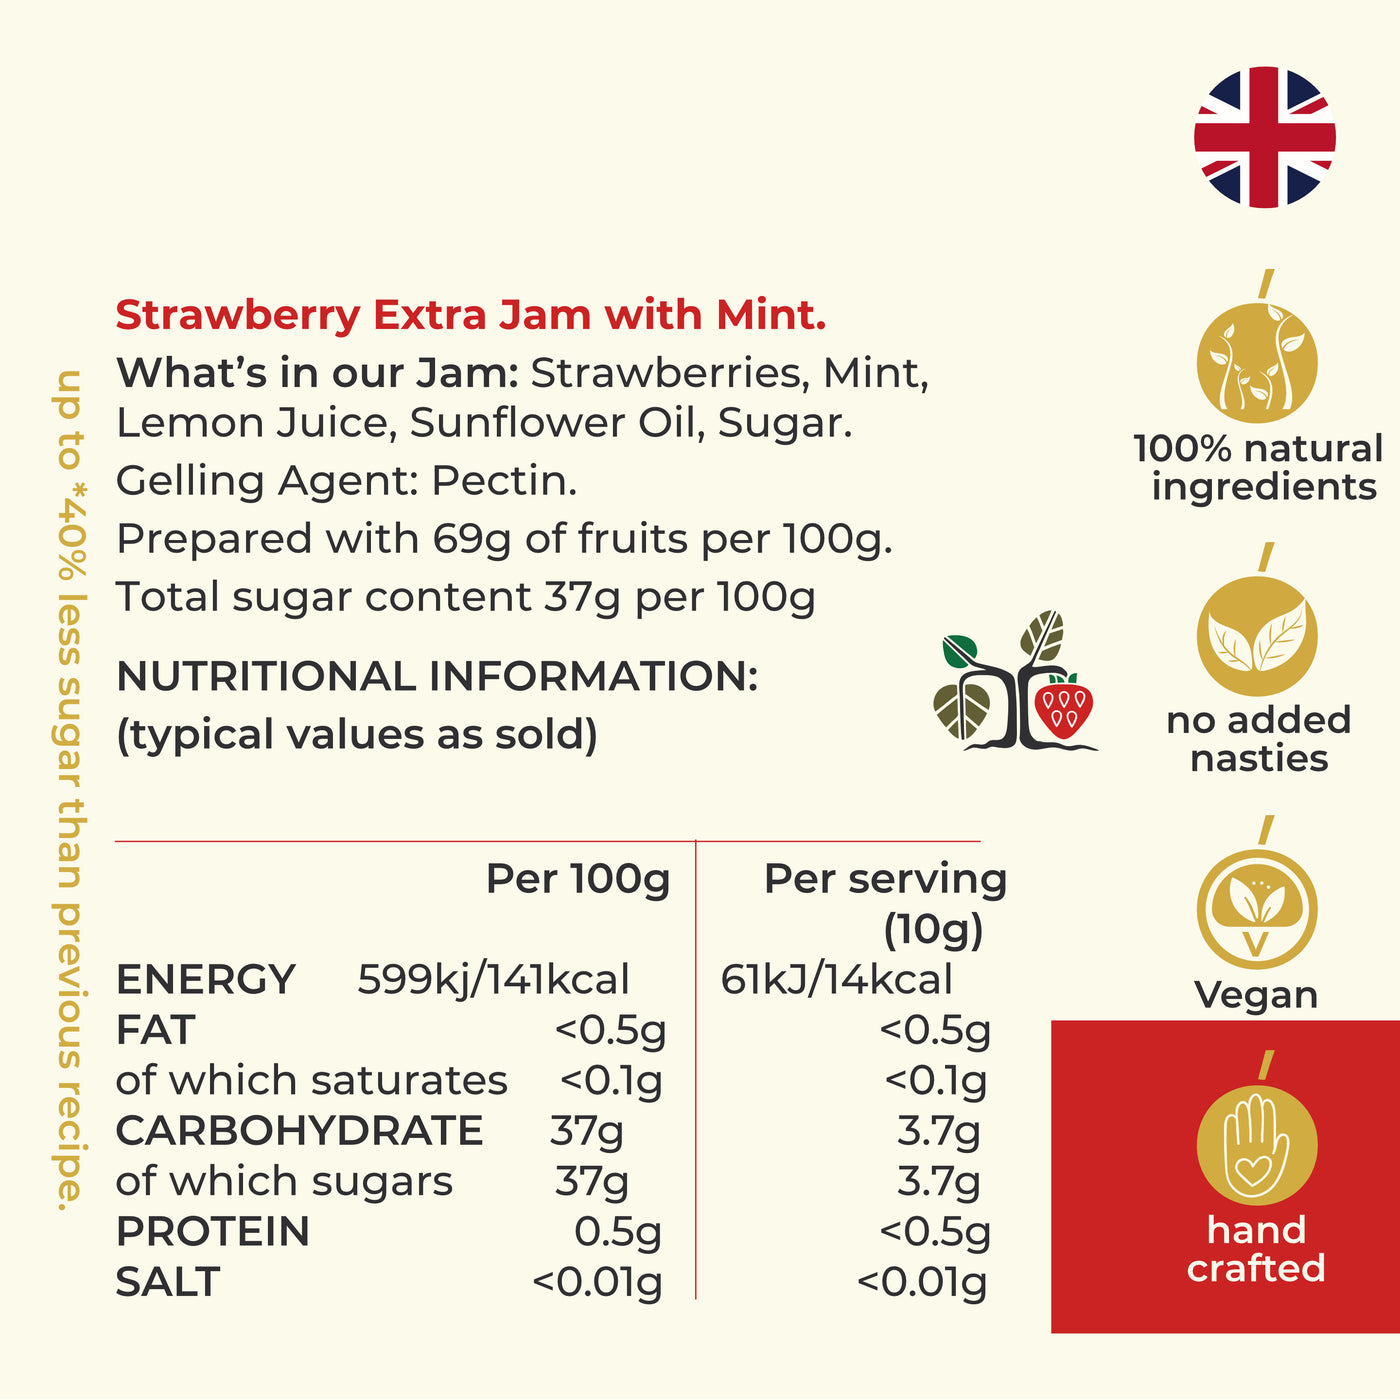 Gourmet Strawberry & Mint Jam - More Fruits, Less Sugar